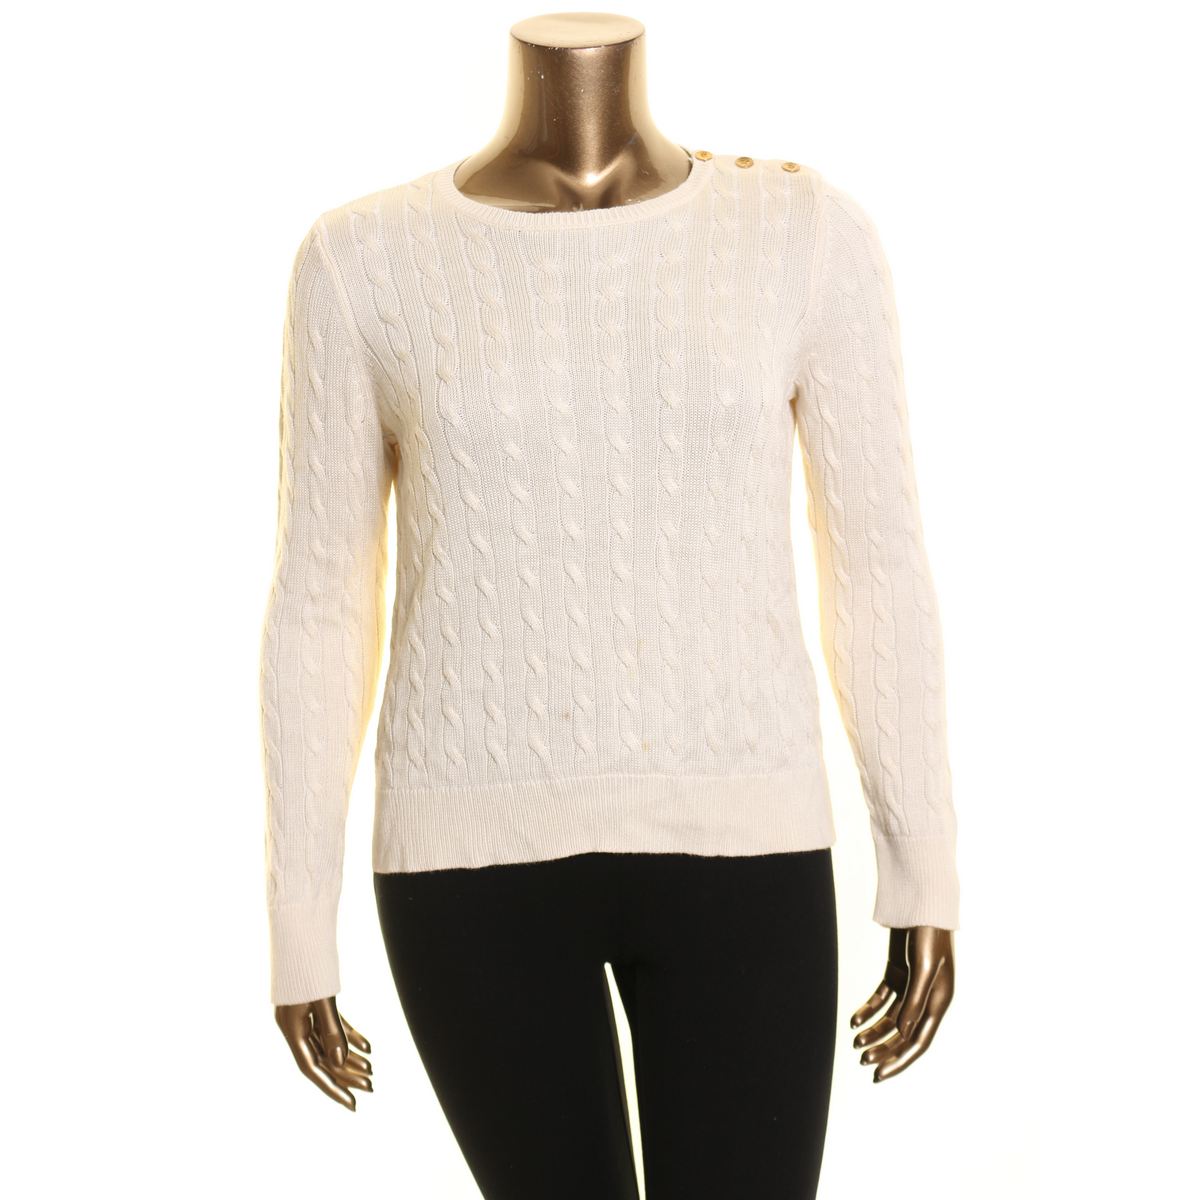 LAUREN RALPH LAUREN Women's Button-trim Cable Knit Crewneck Sweater Top L  TEDO | eBay